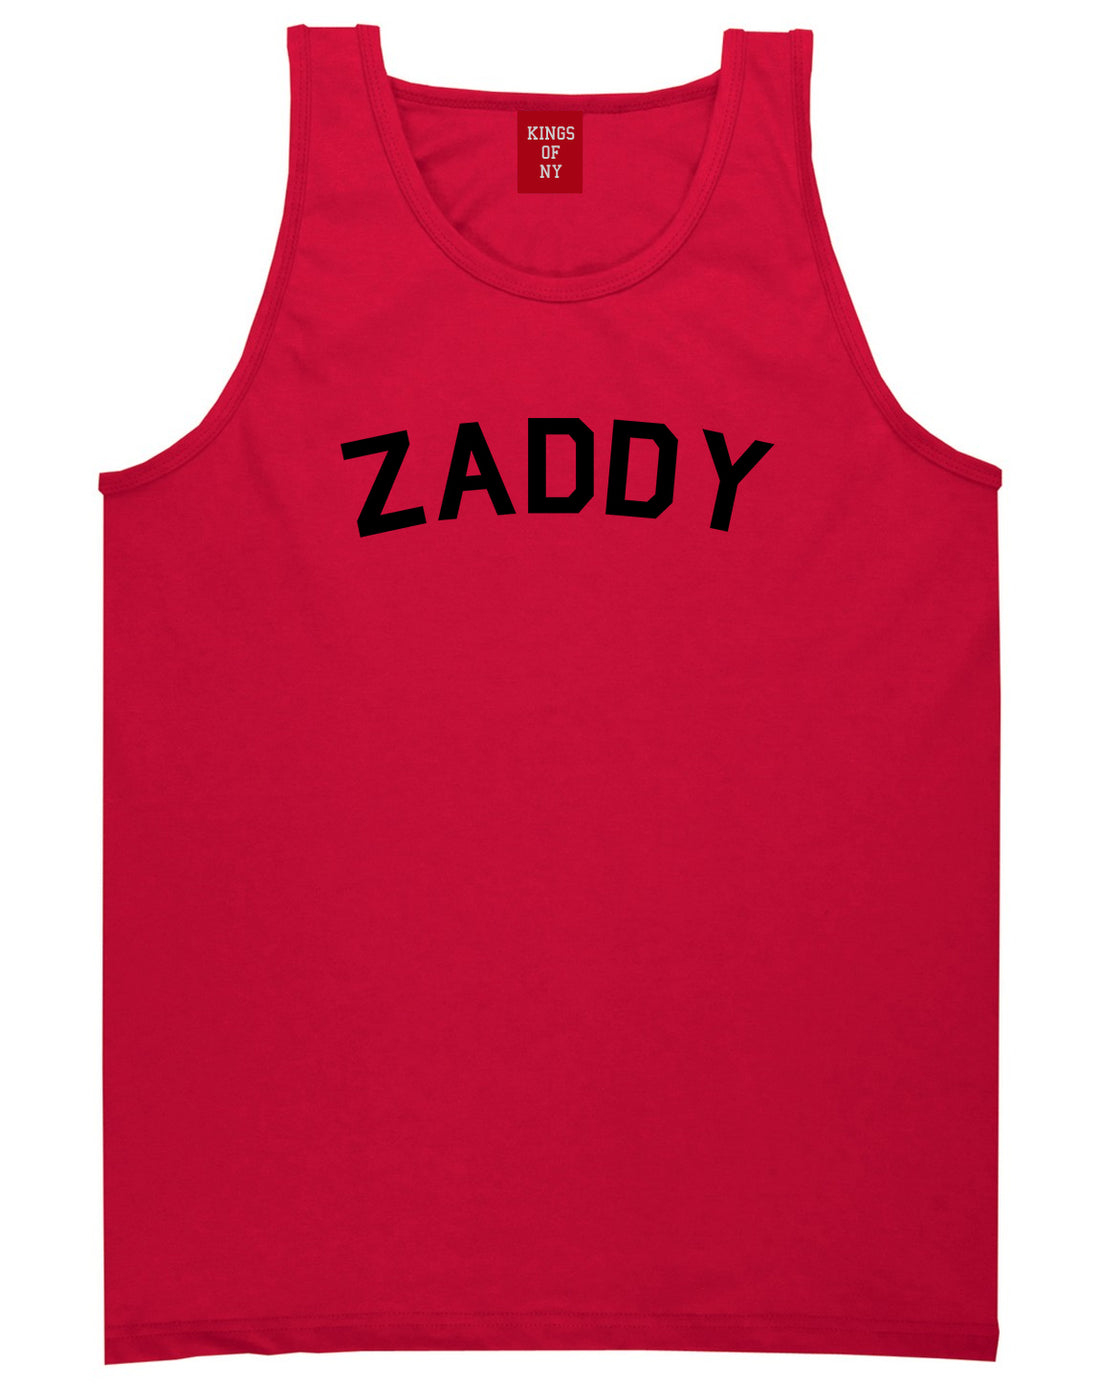 Zaddy Mens Tank Top Shirt Red